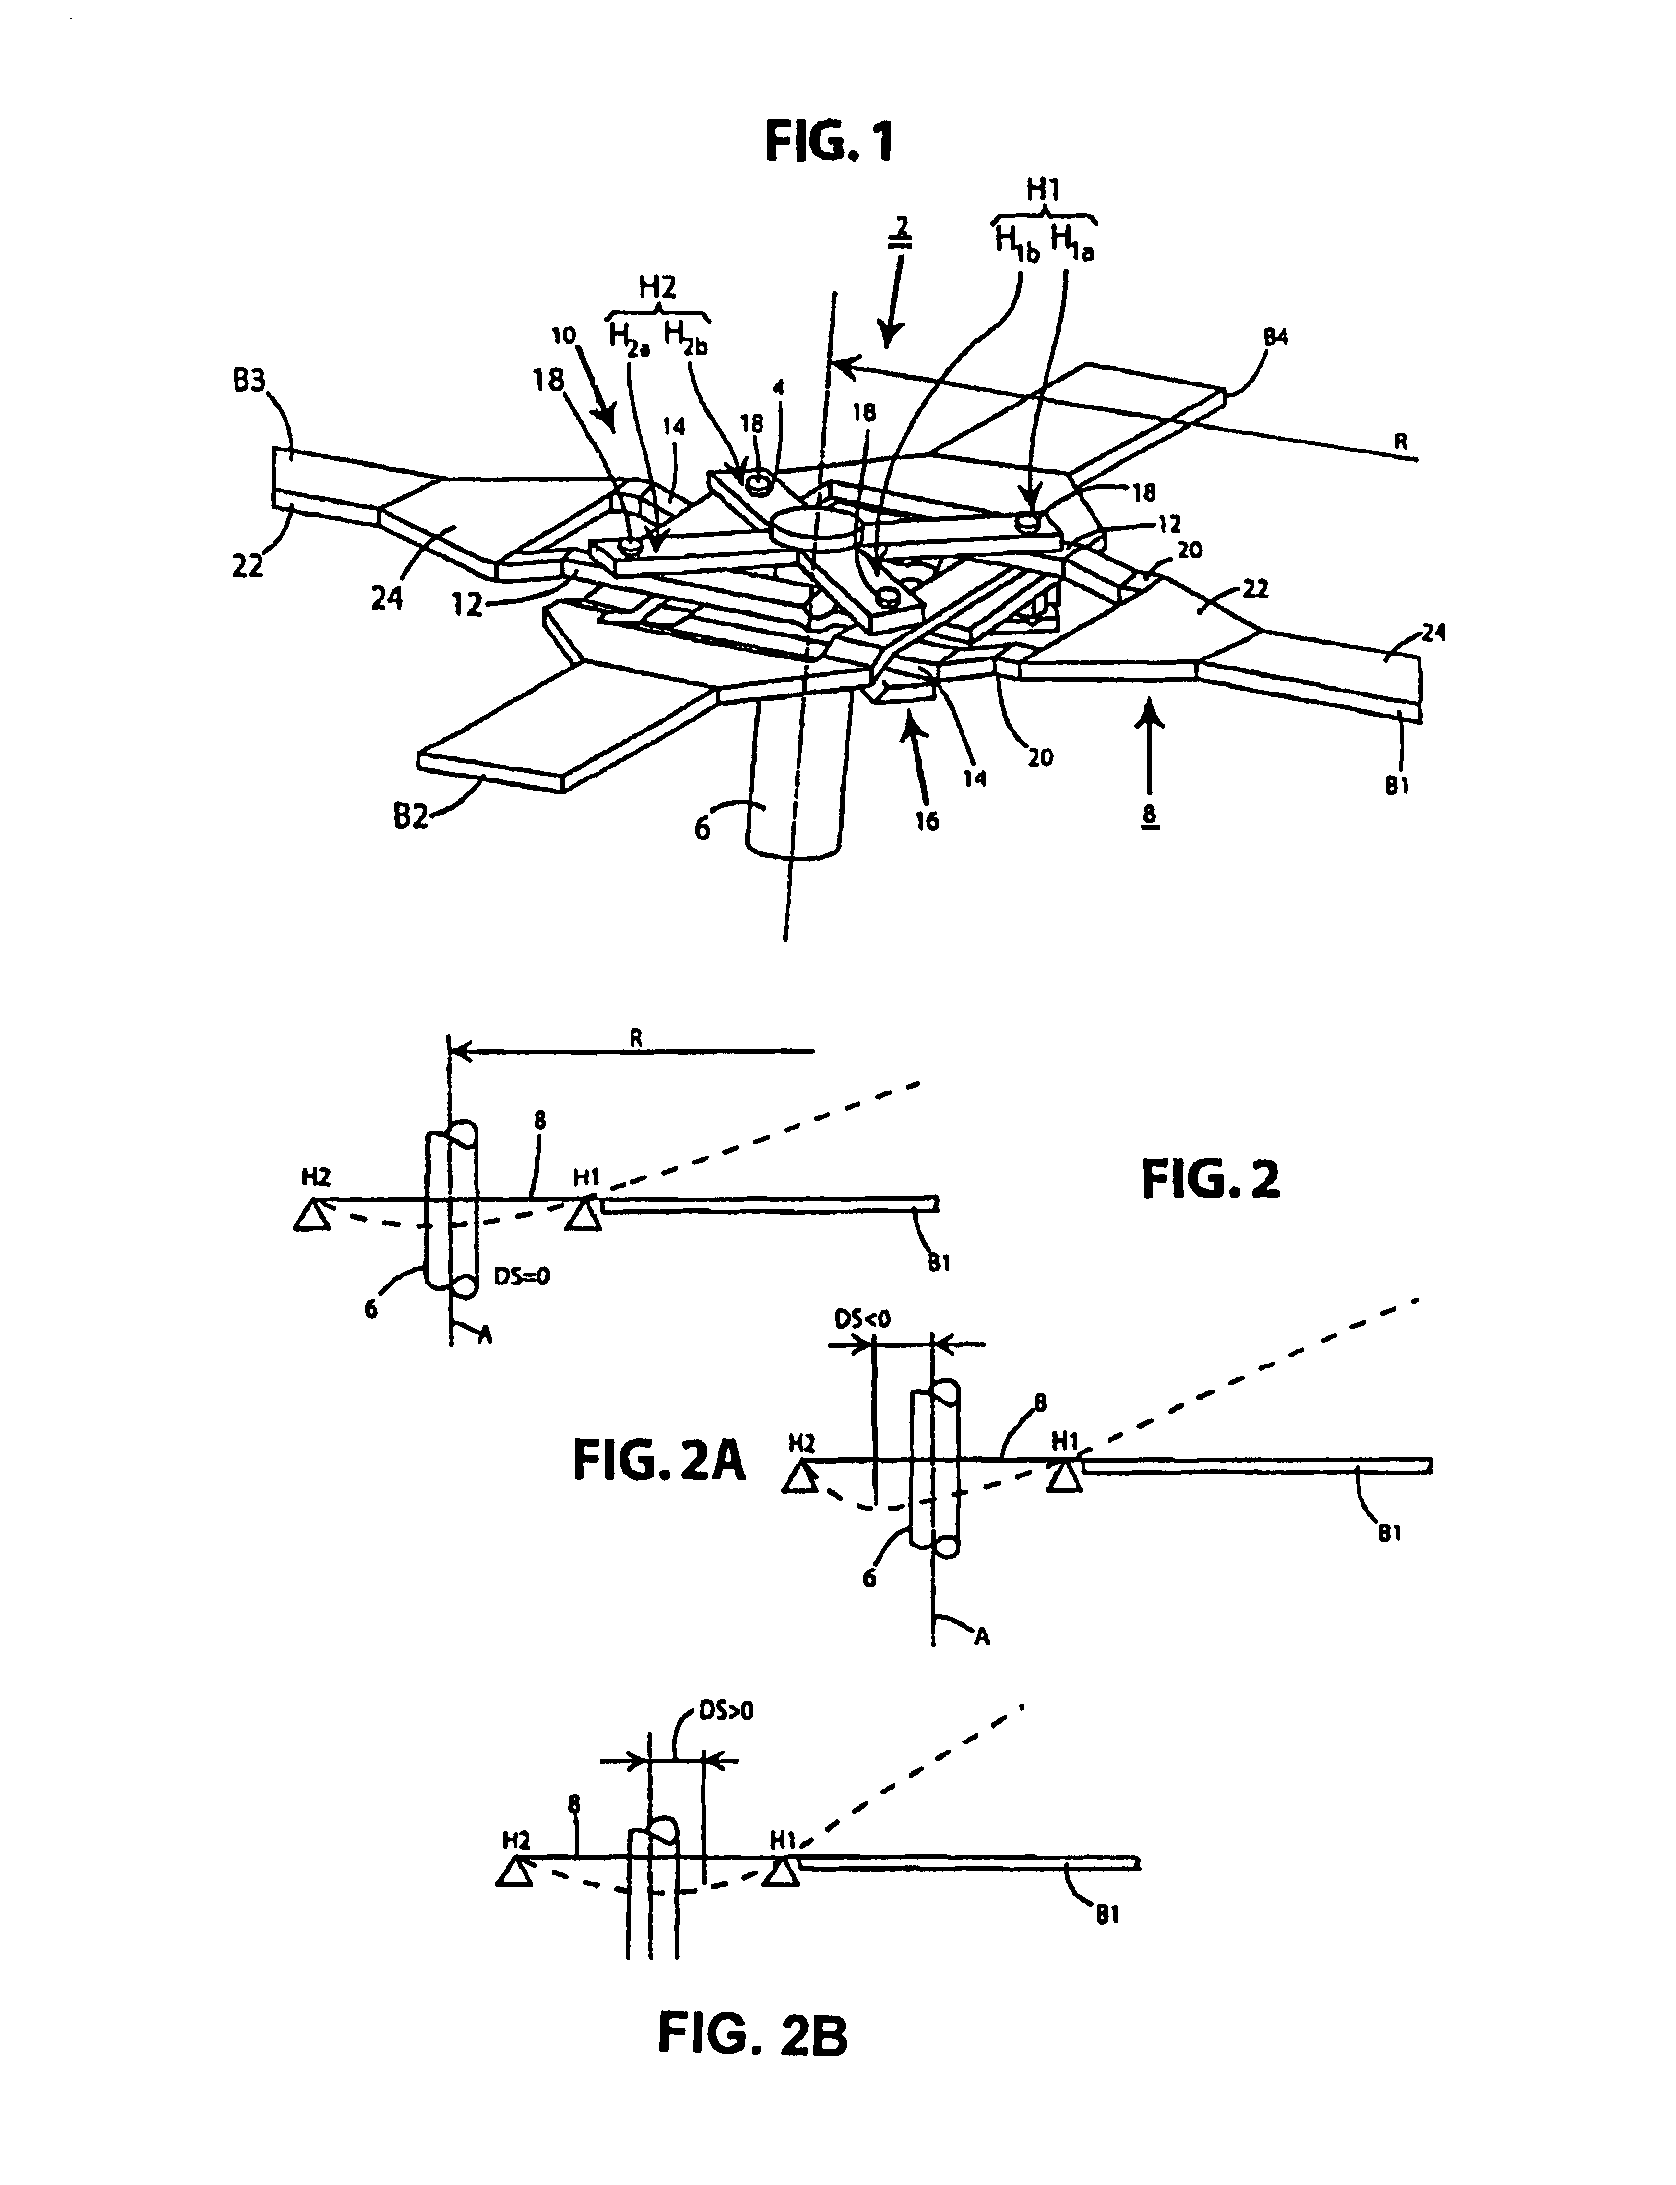 Rotor and gyrocopter with said rotor